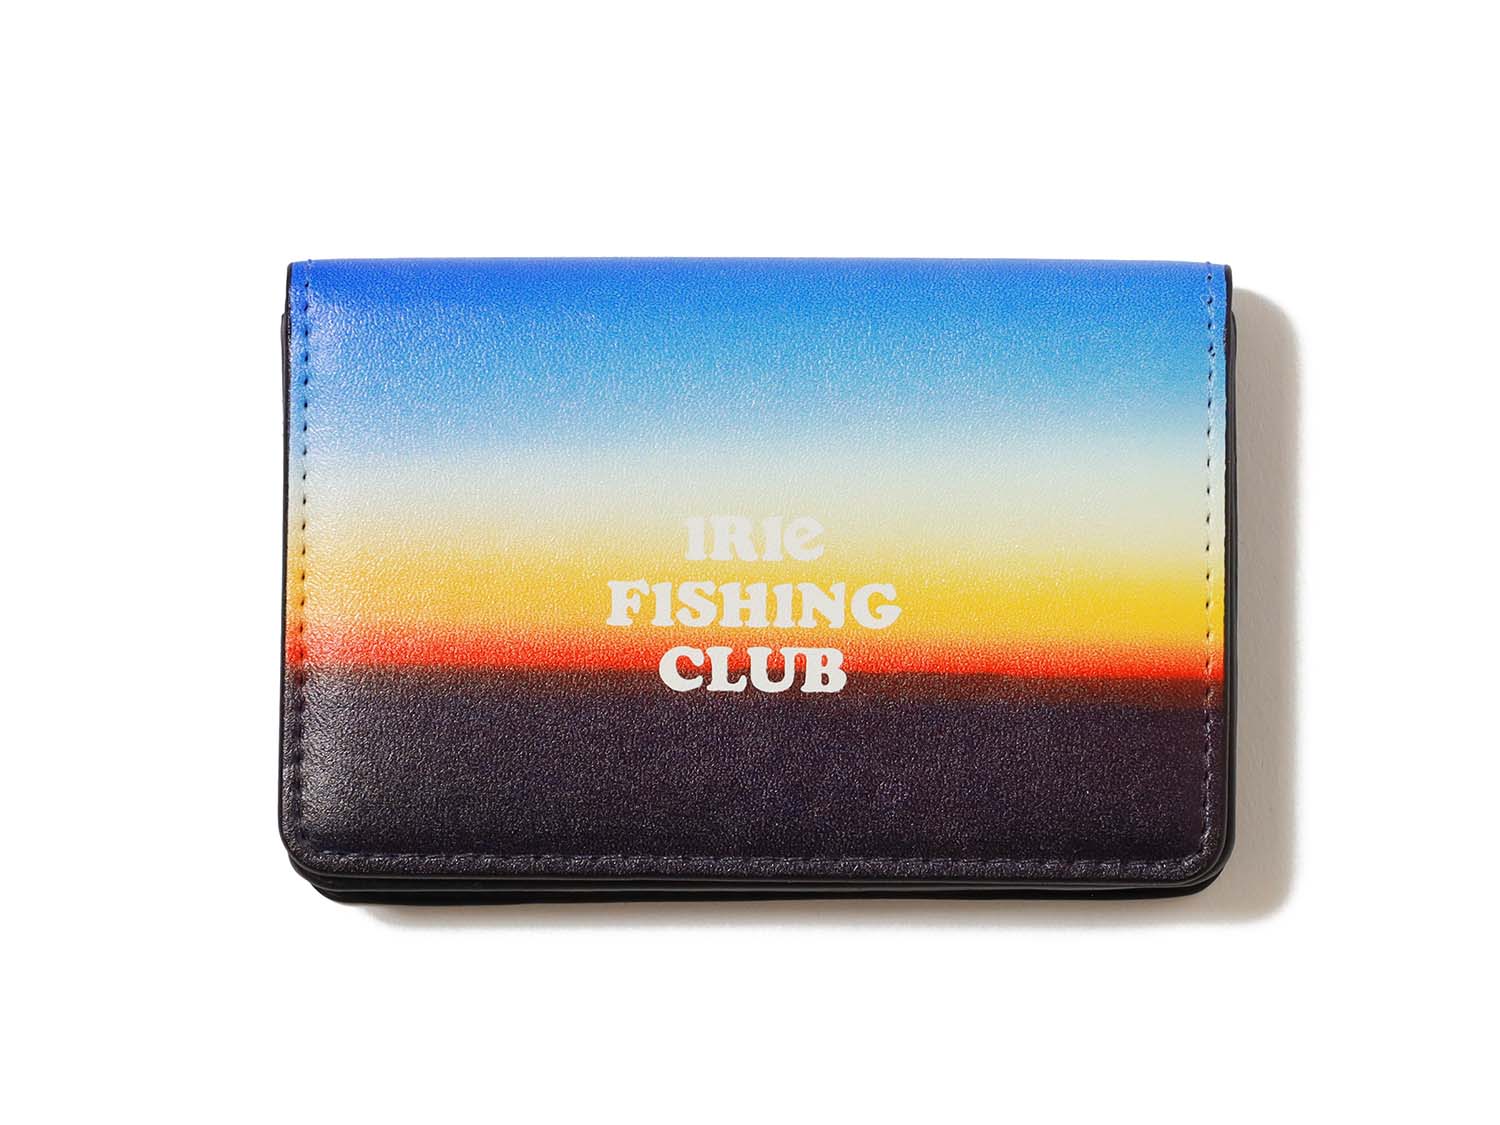 YOAKE NAME CARD CASE - IRIE FISHING CLUB